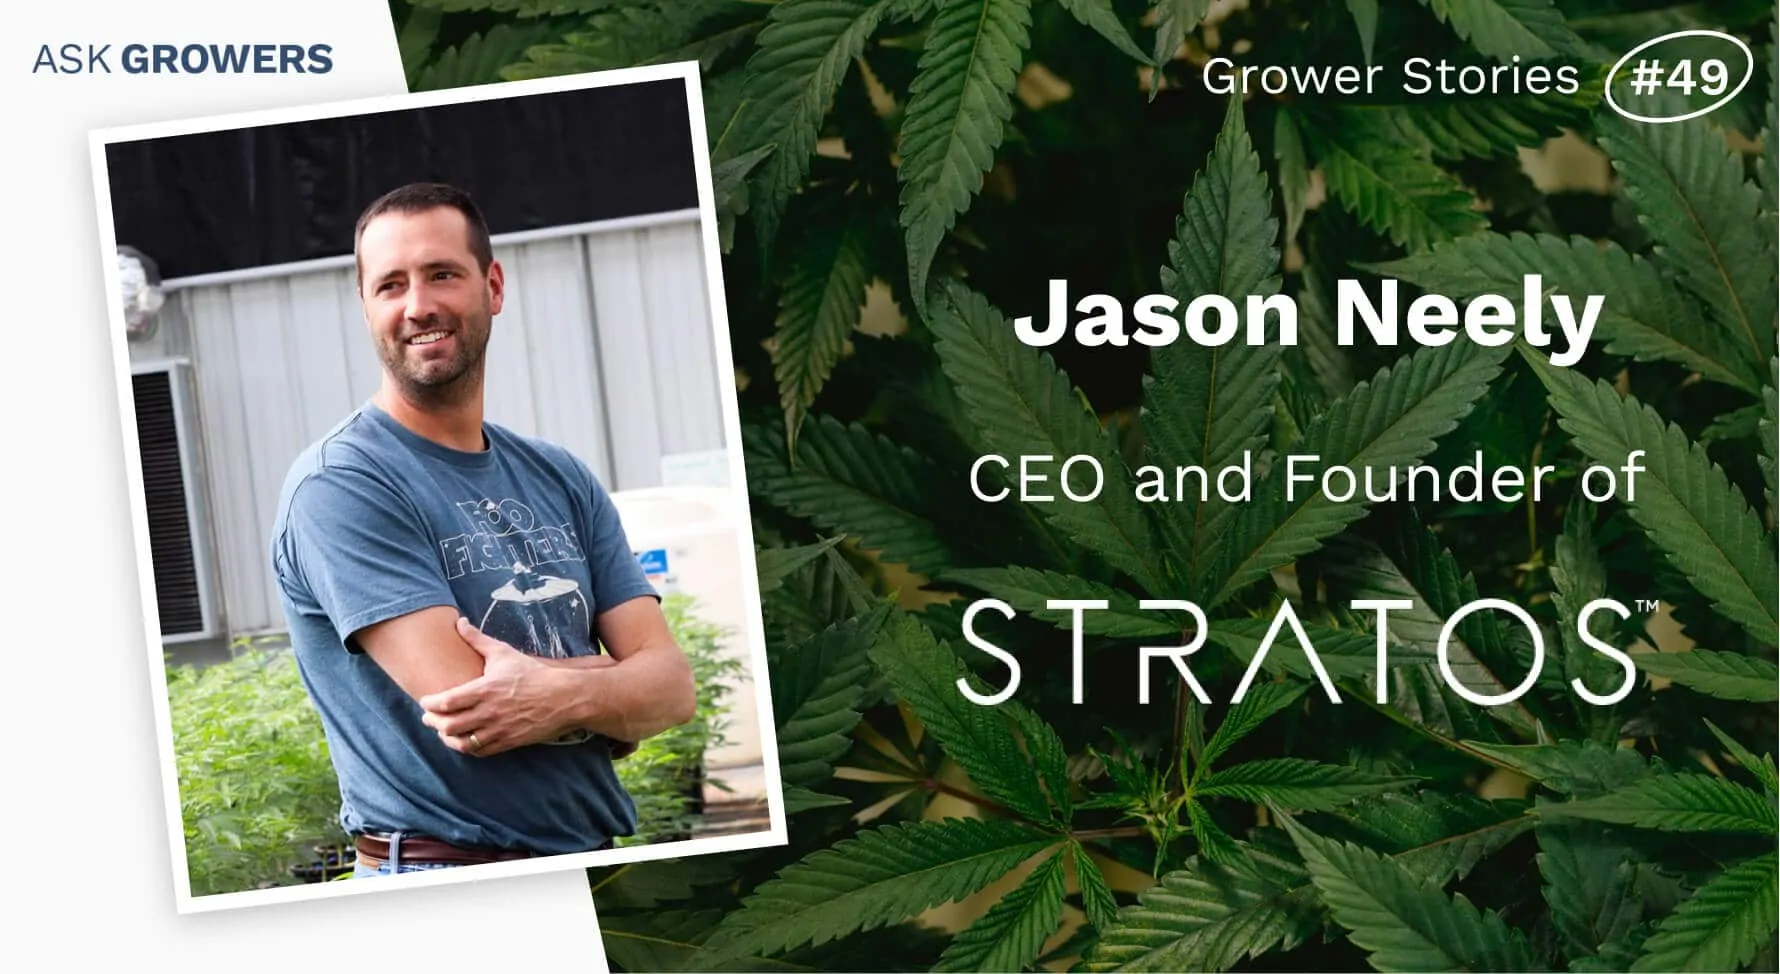 Grower Stories #49: Jason Neely